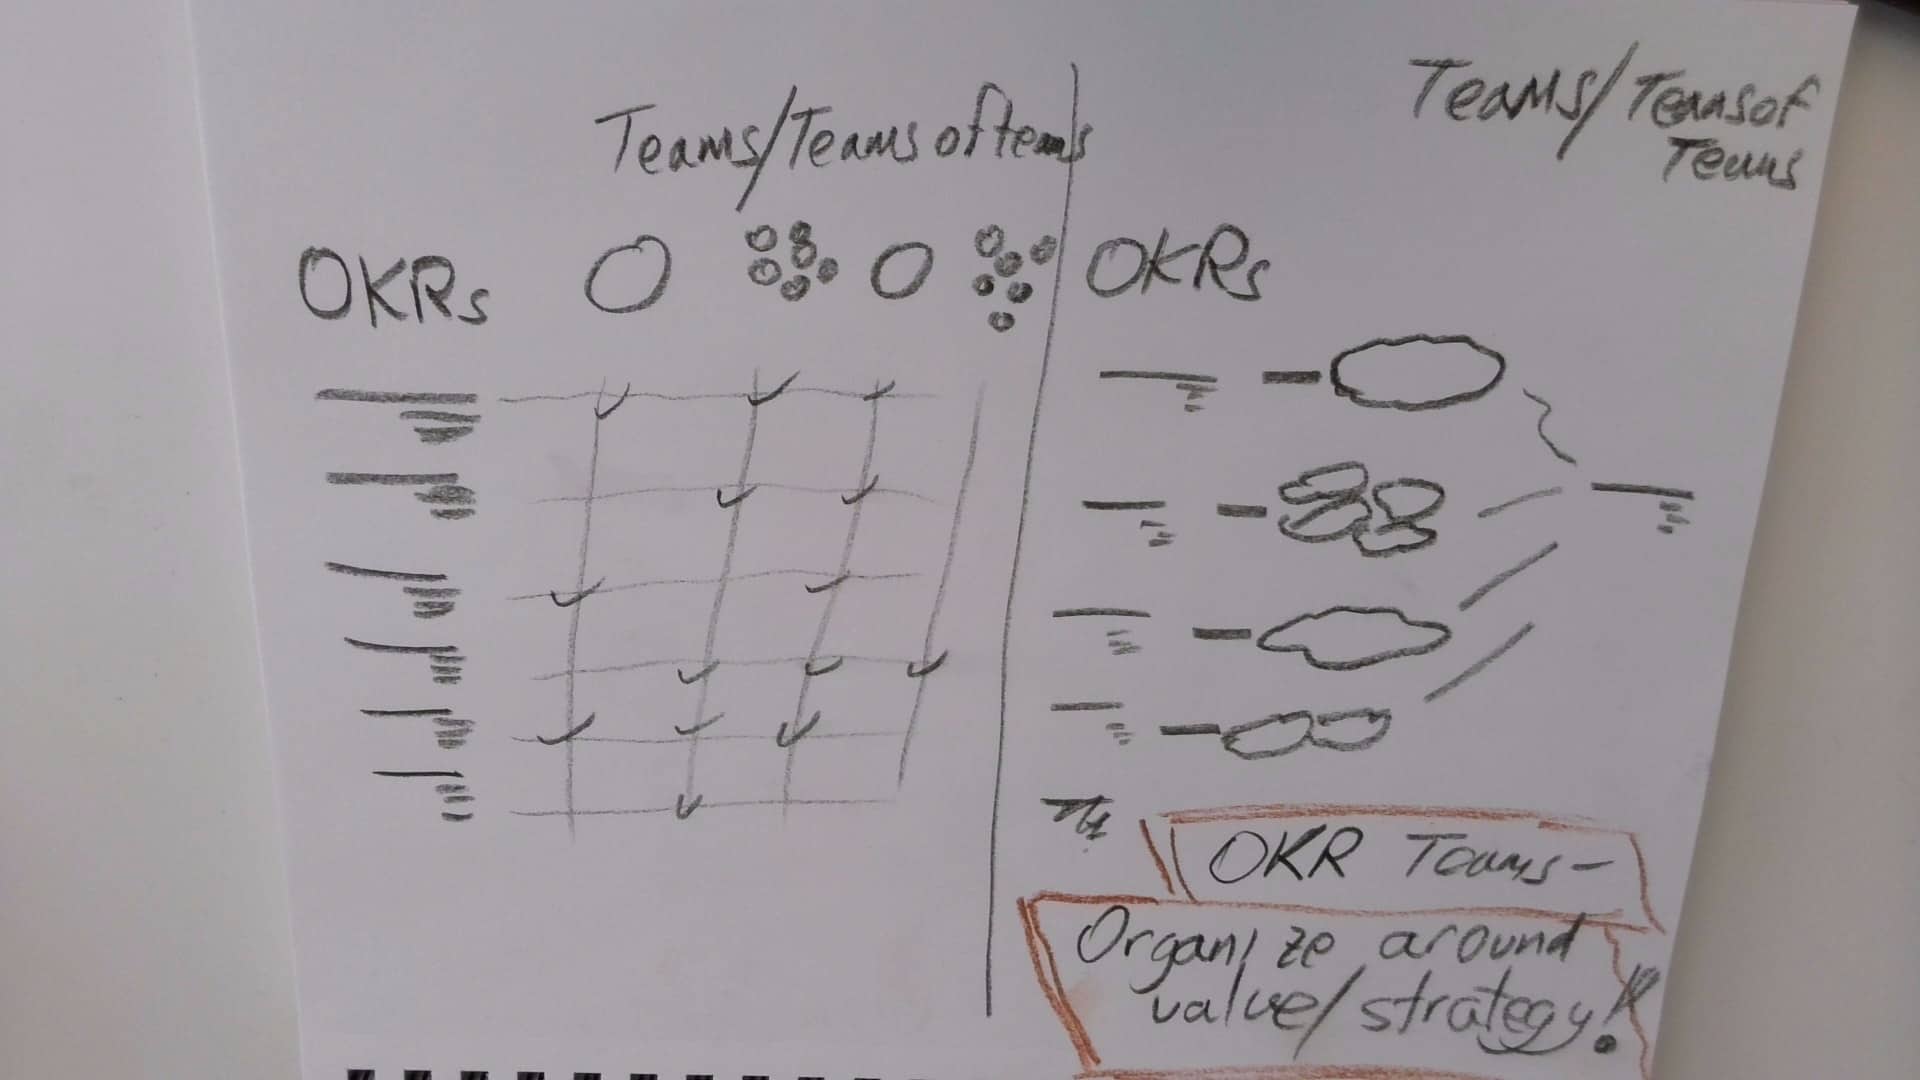 OKRs Matrix vs Organizing around OKRs